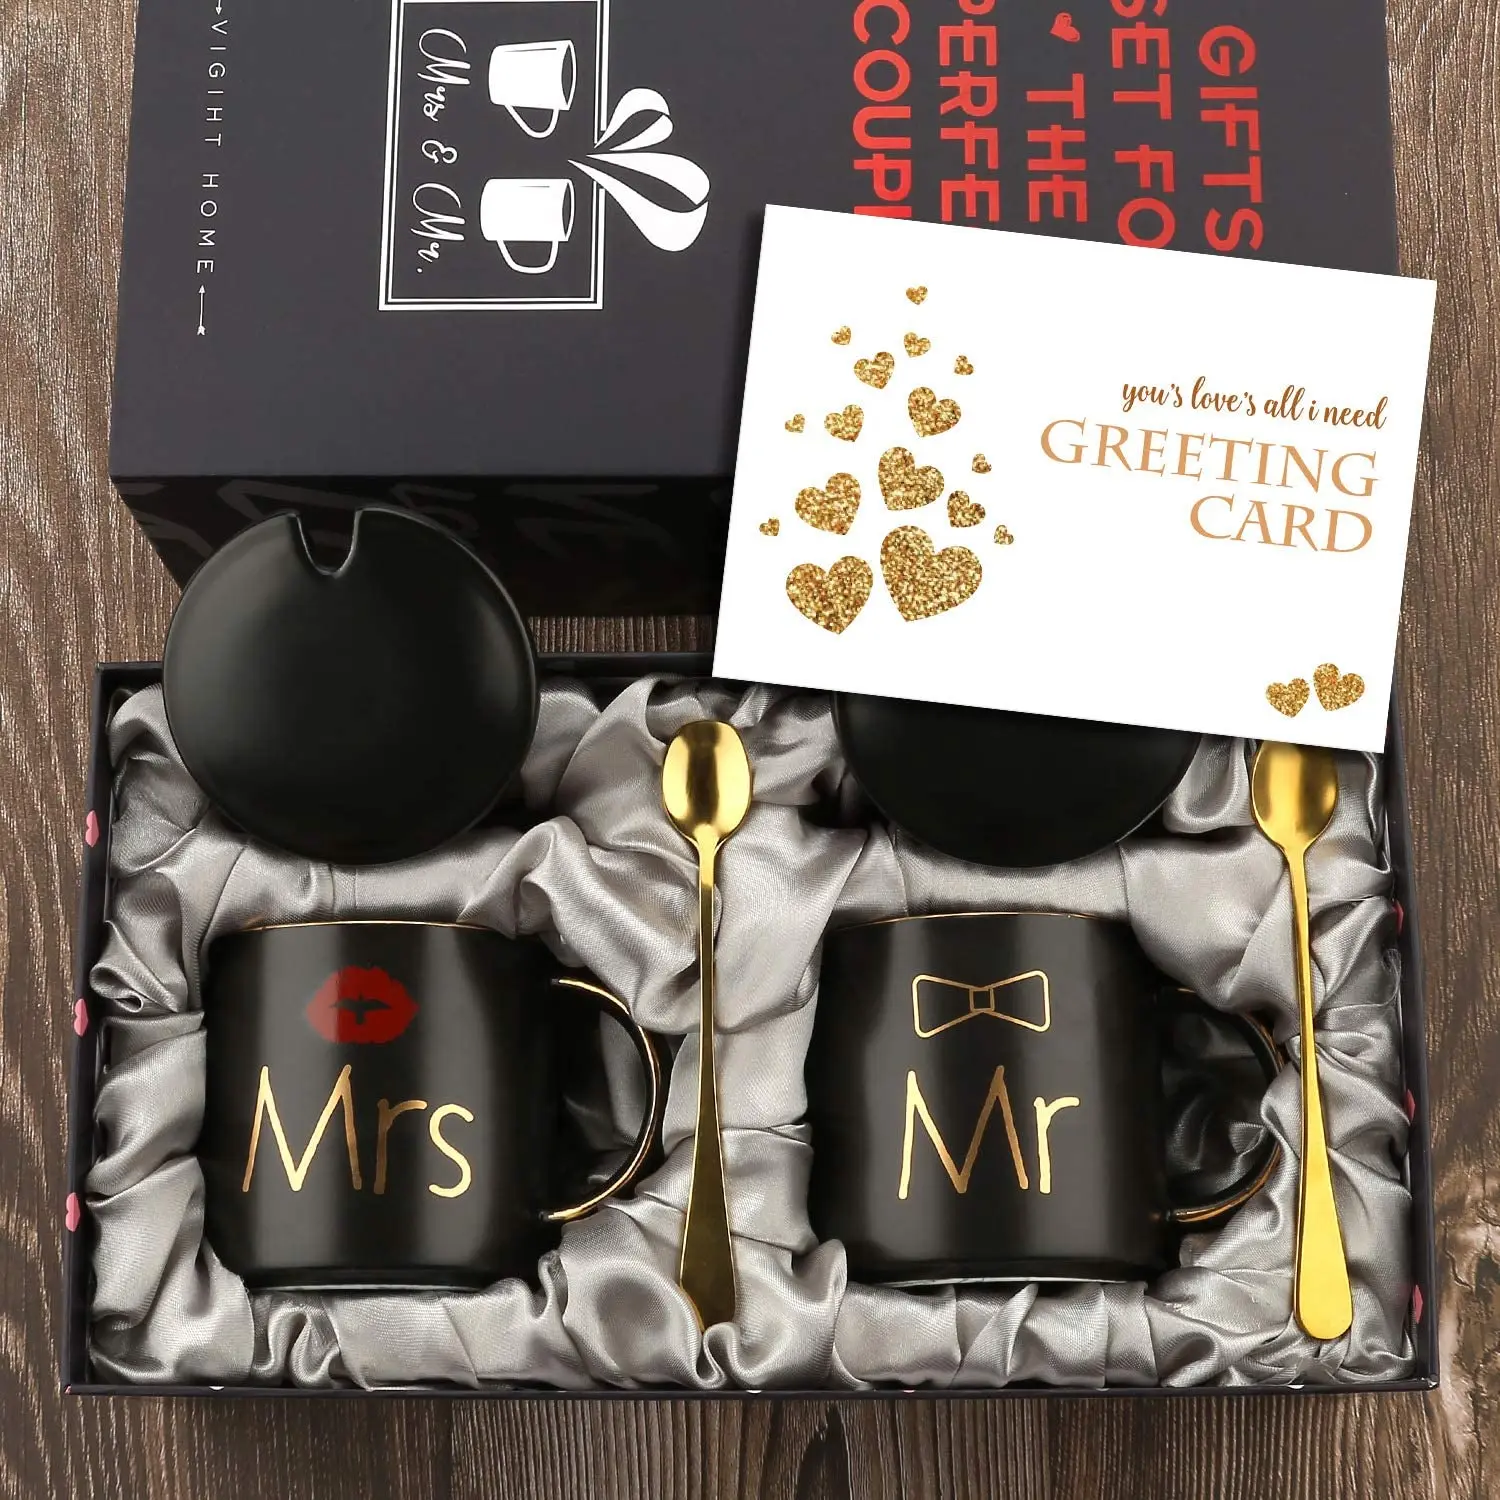 

High Quality Black Mr and Mrs Coffee Mugs Cups Gift Set Ceramic Coffee Mug